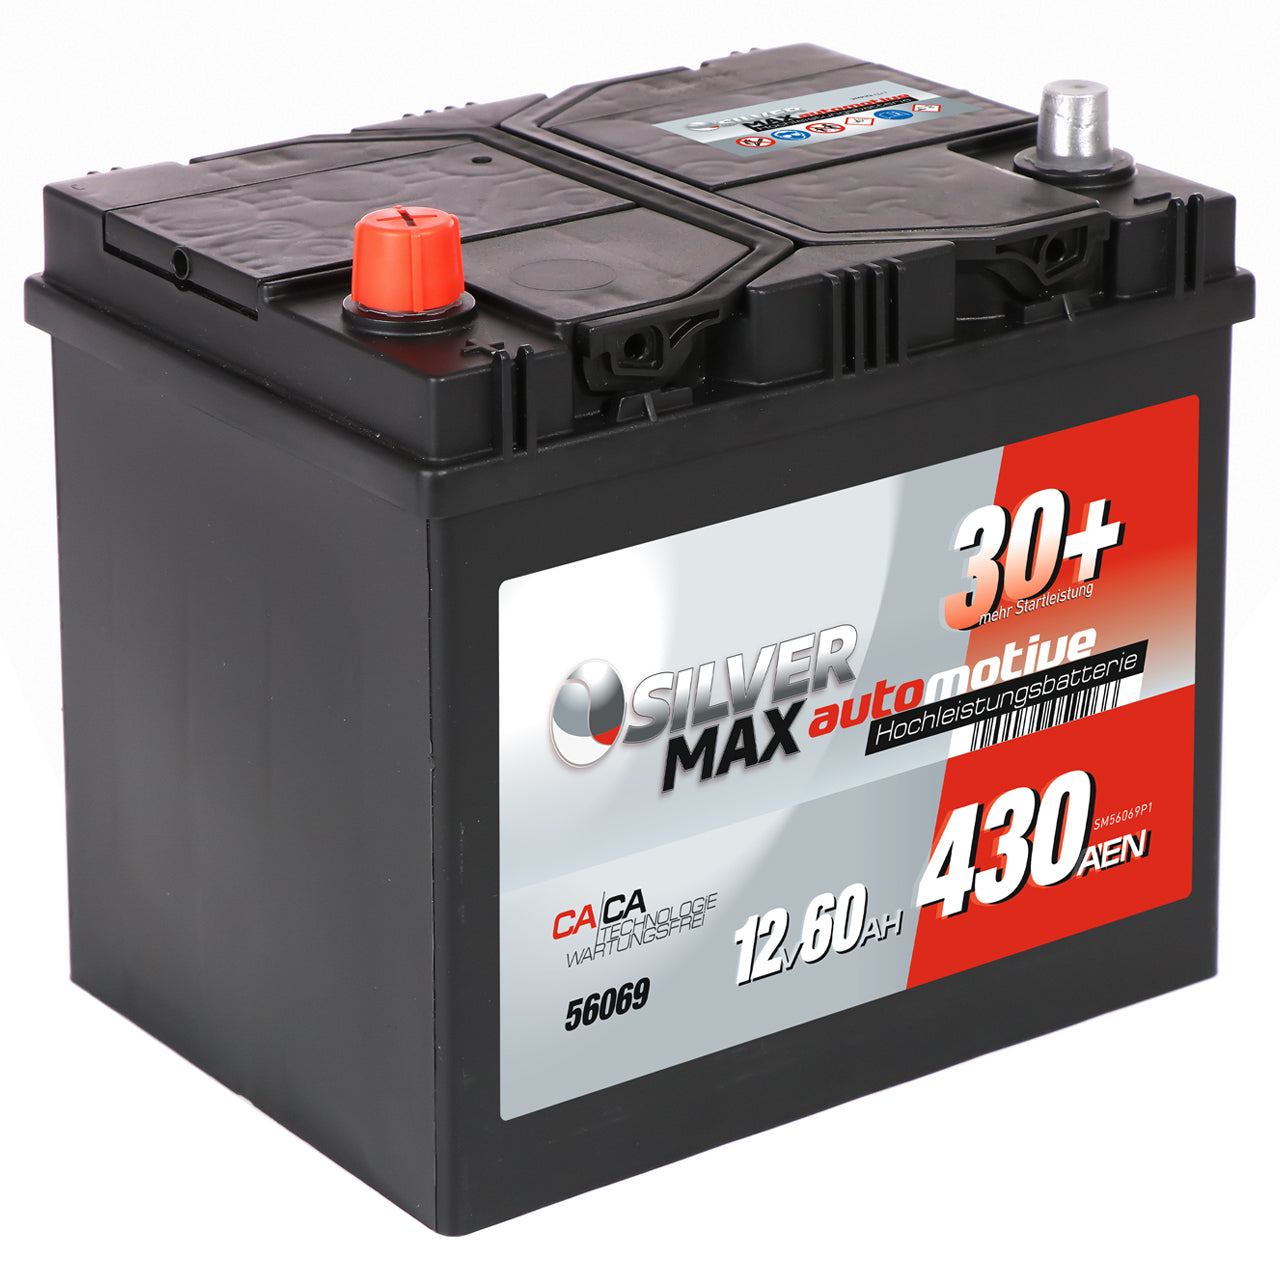 Autobatterie 60AH Pluspol Links